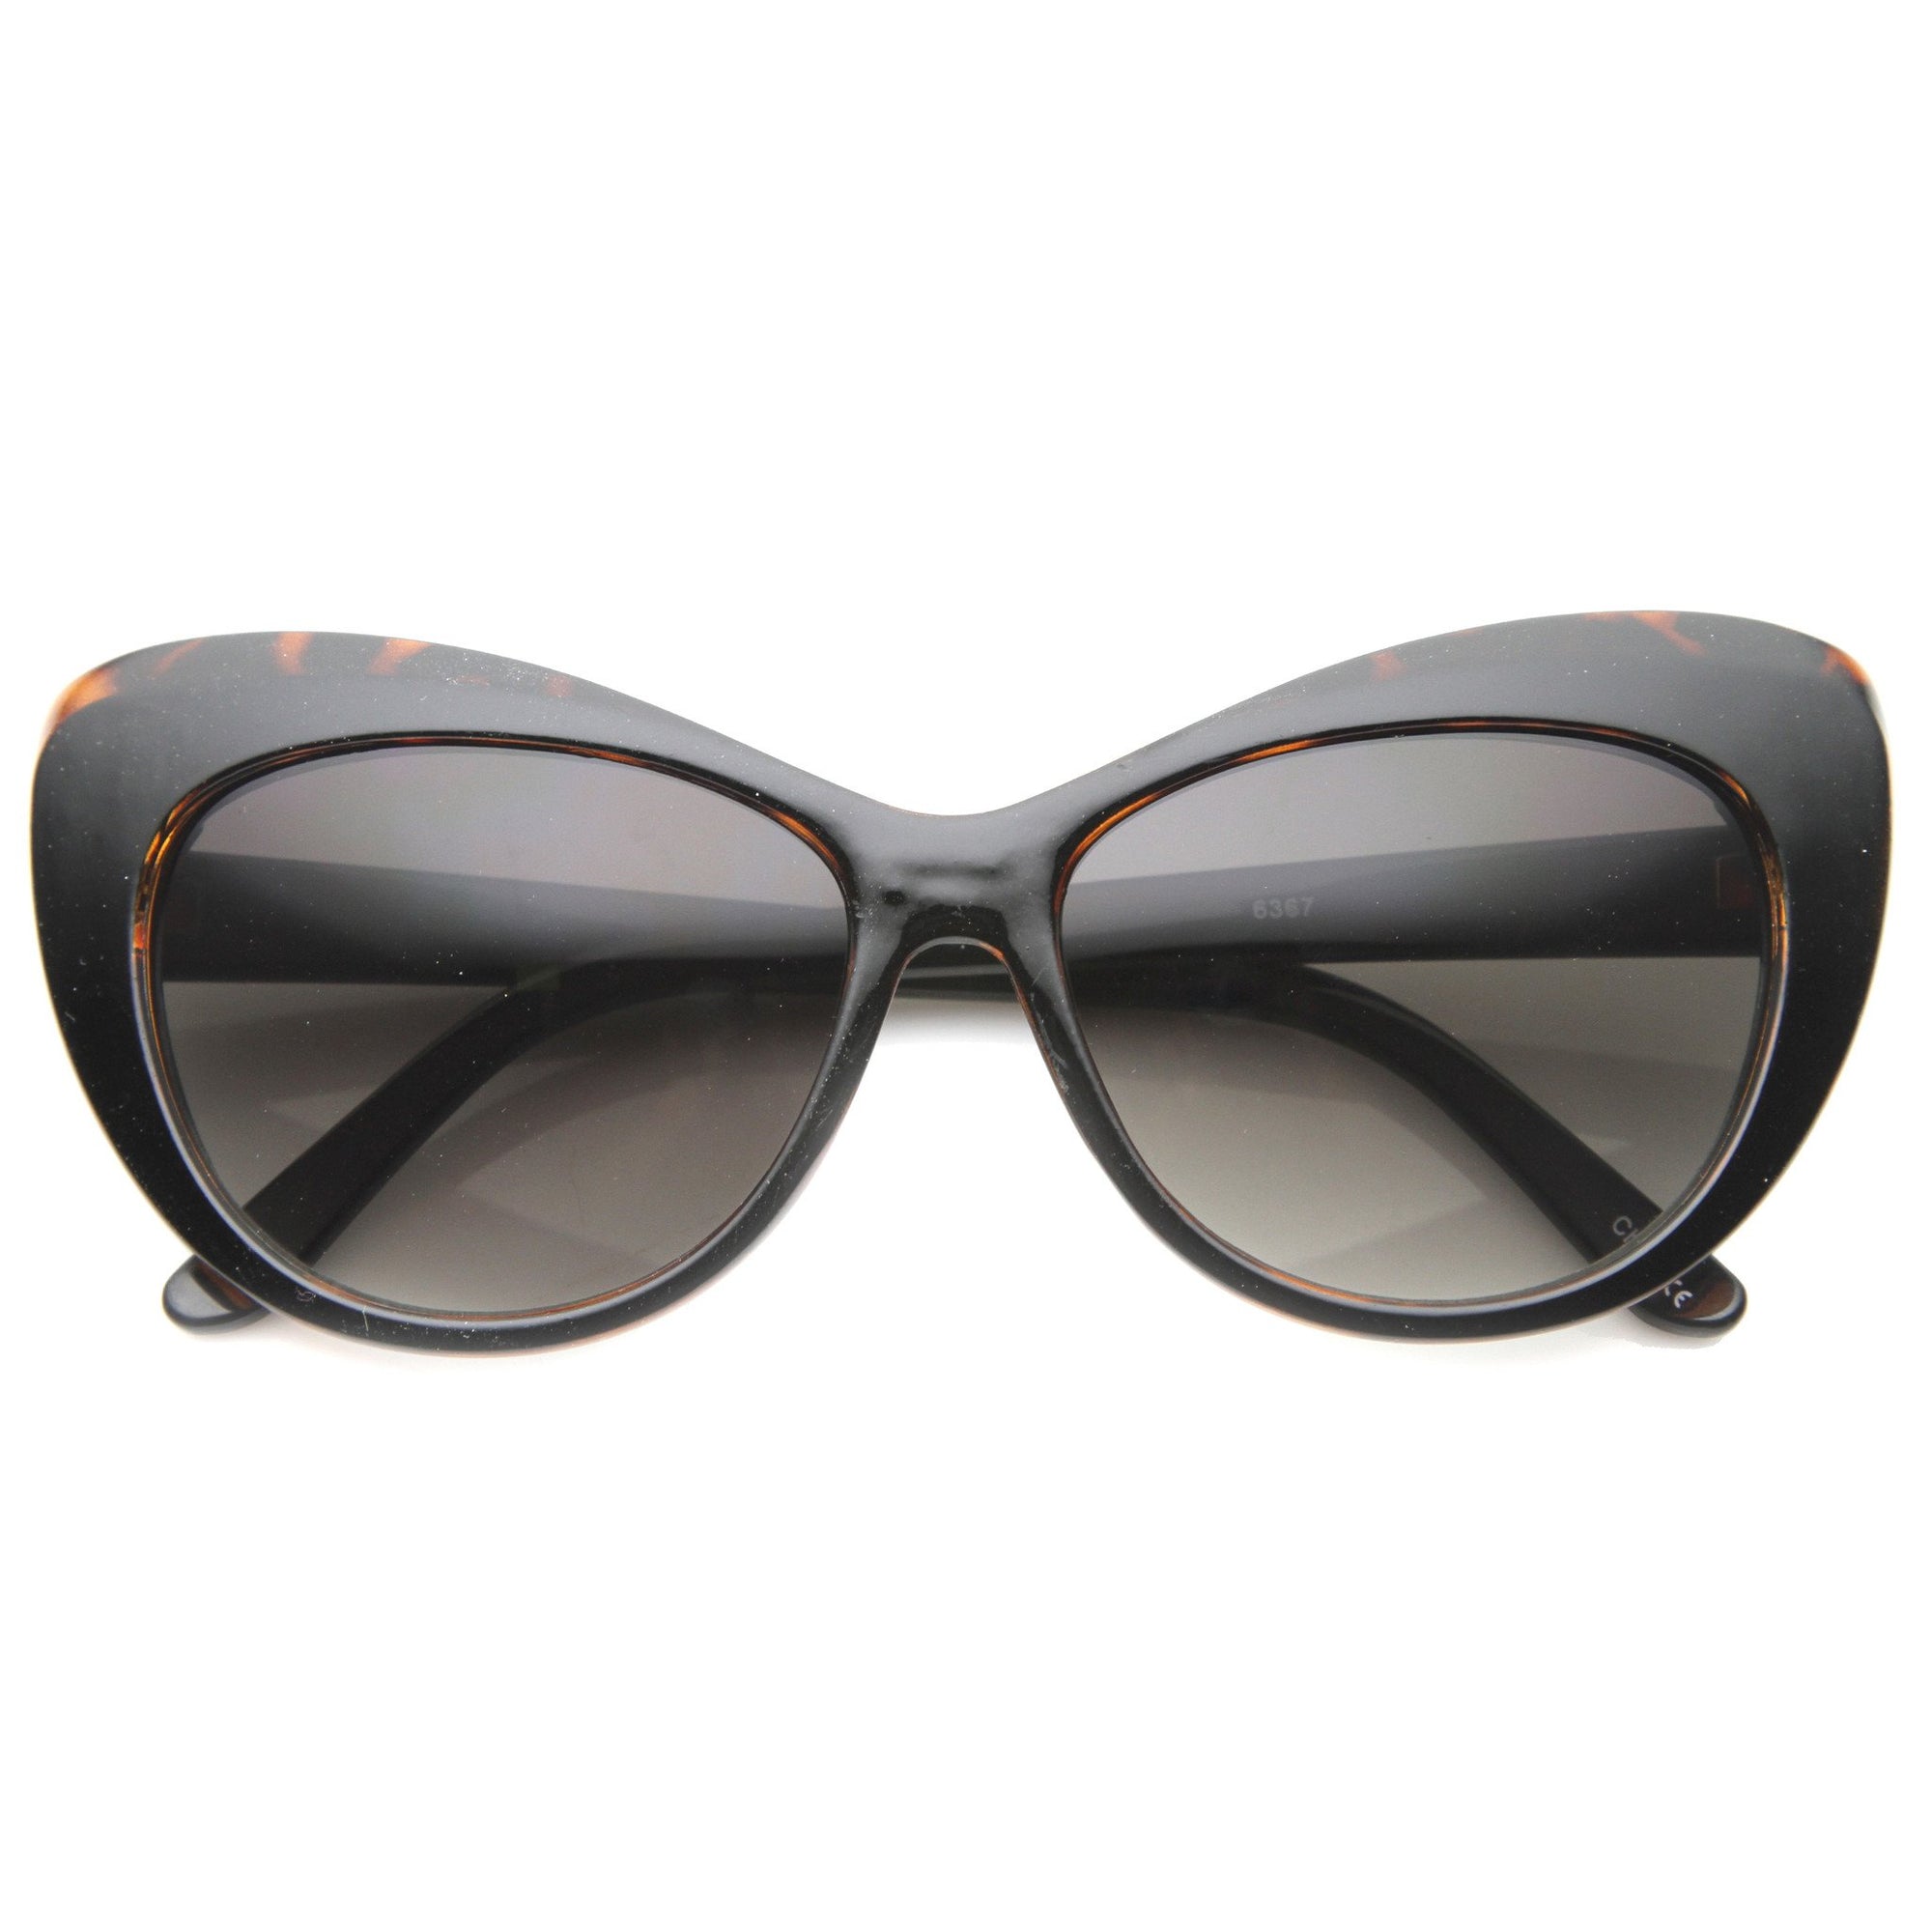 Women's 1950's Retro Oversize Cat Eye Sunglasses - zeroUV